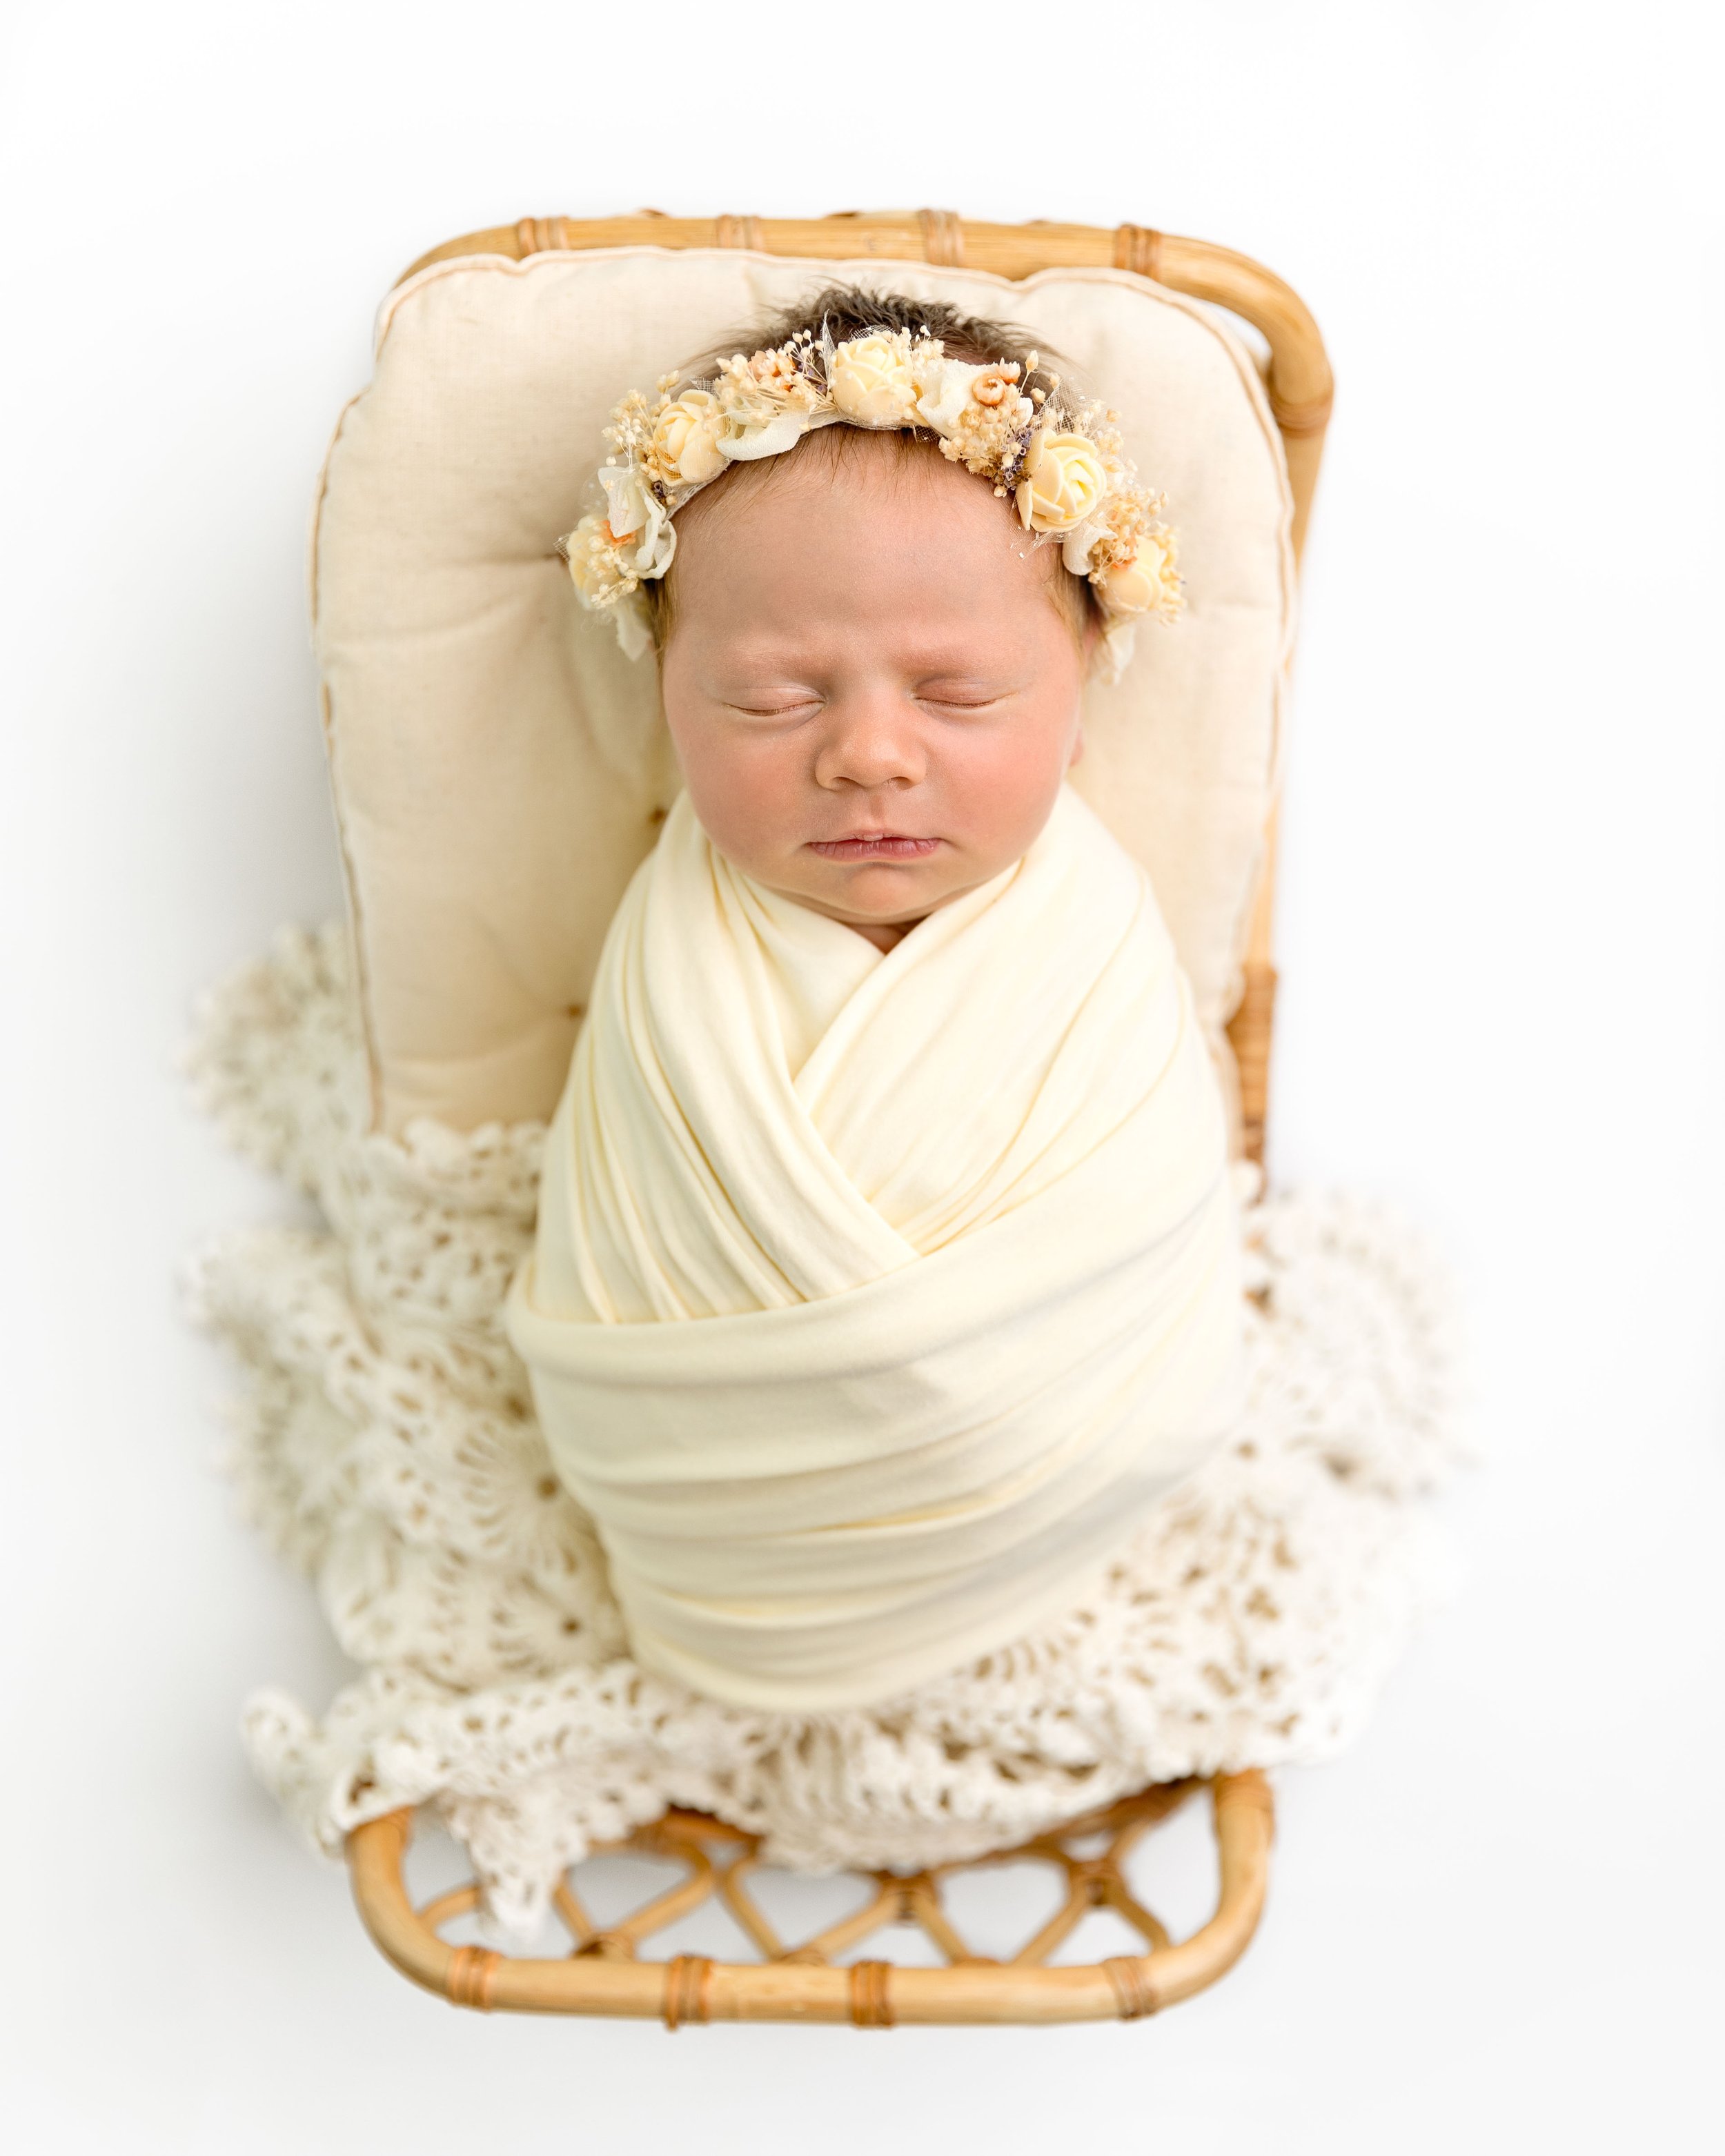 Newborn-photography-baby-images-family-photos-spokane-washington-4.jpg